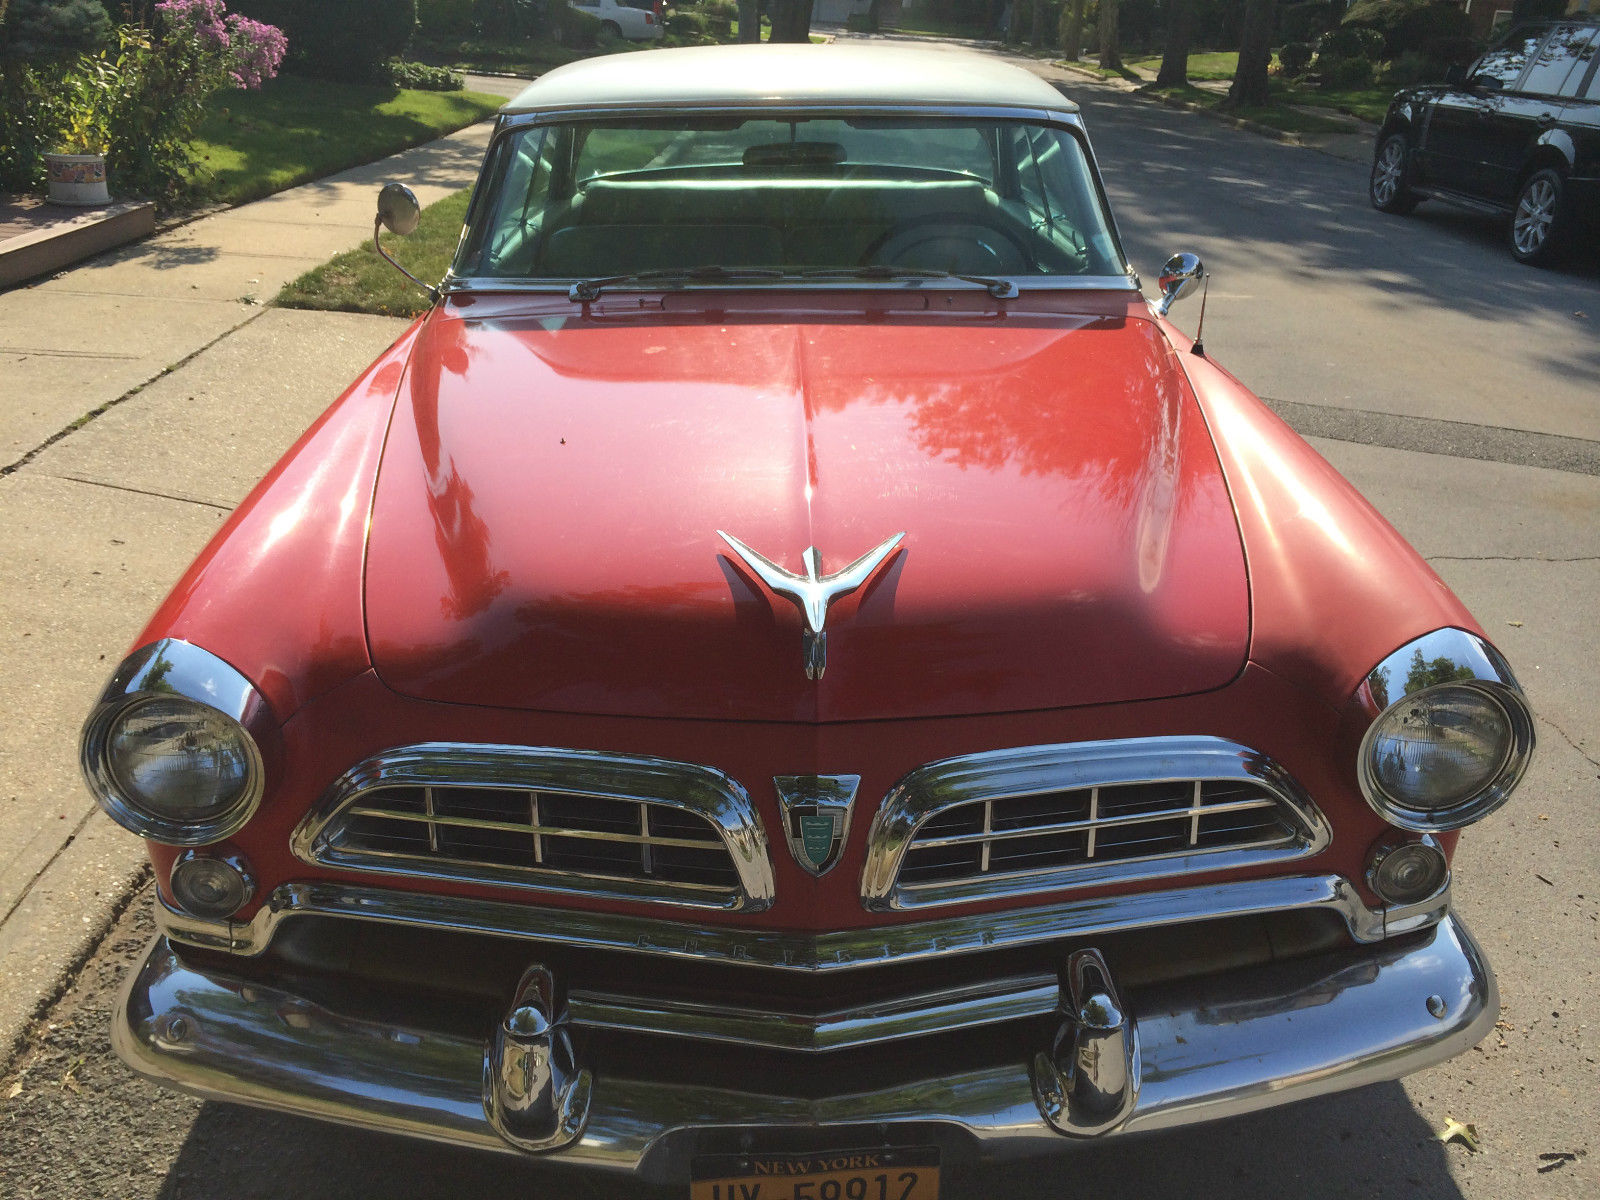 1955 Chrysler Windsor Deluxe, Ltd Production Nassau Edition (A True ...